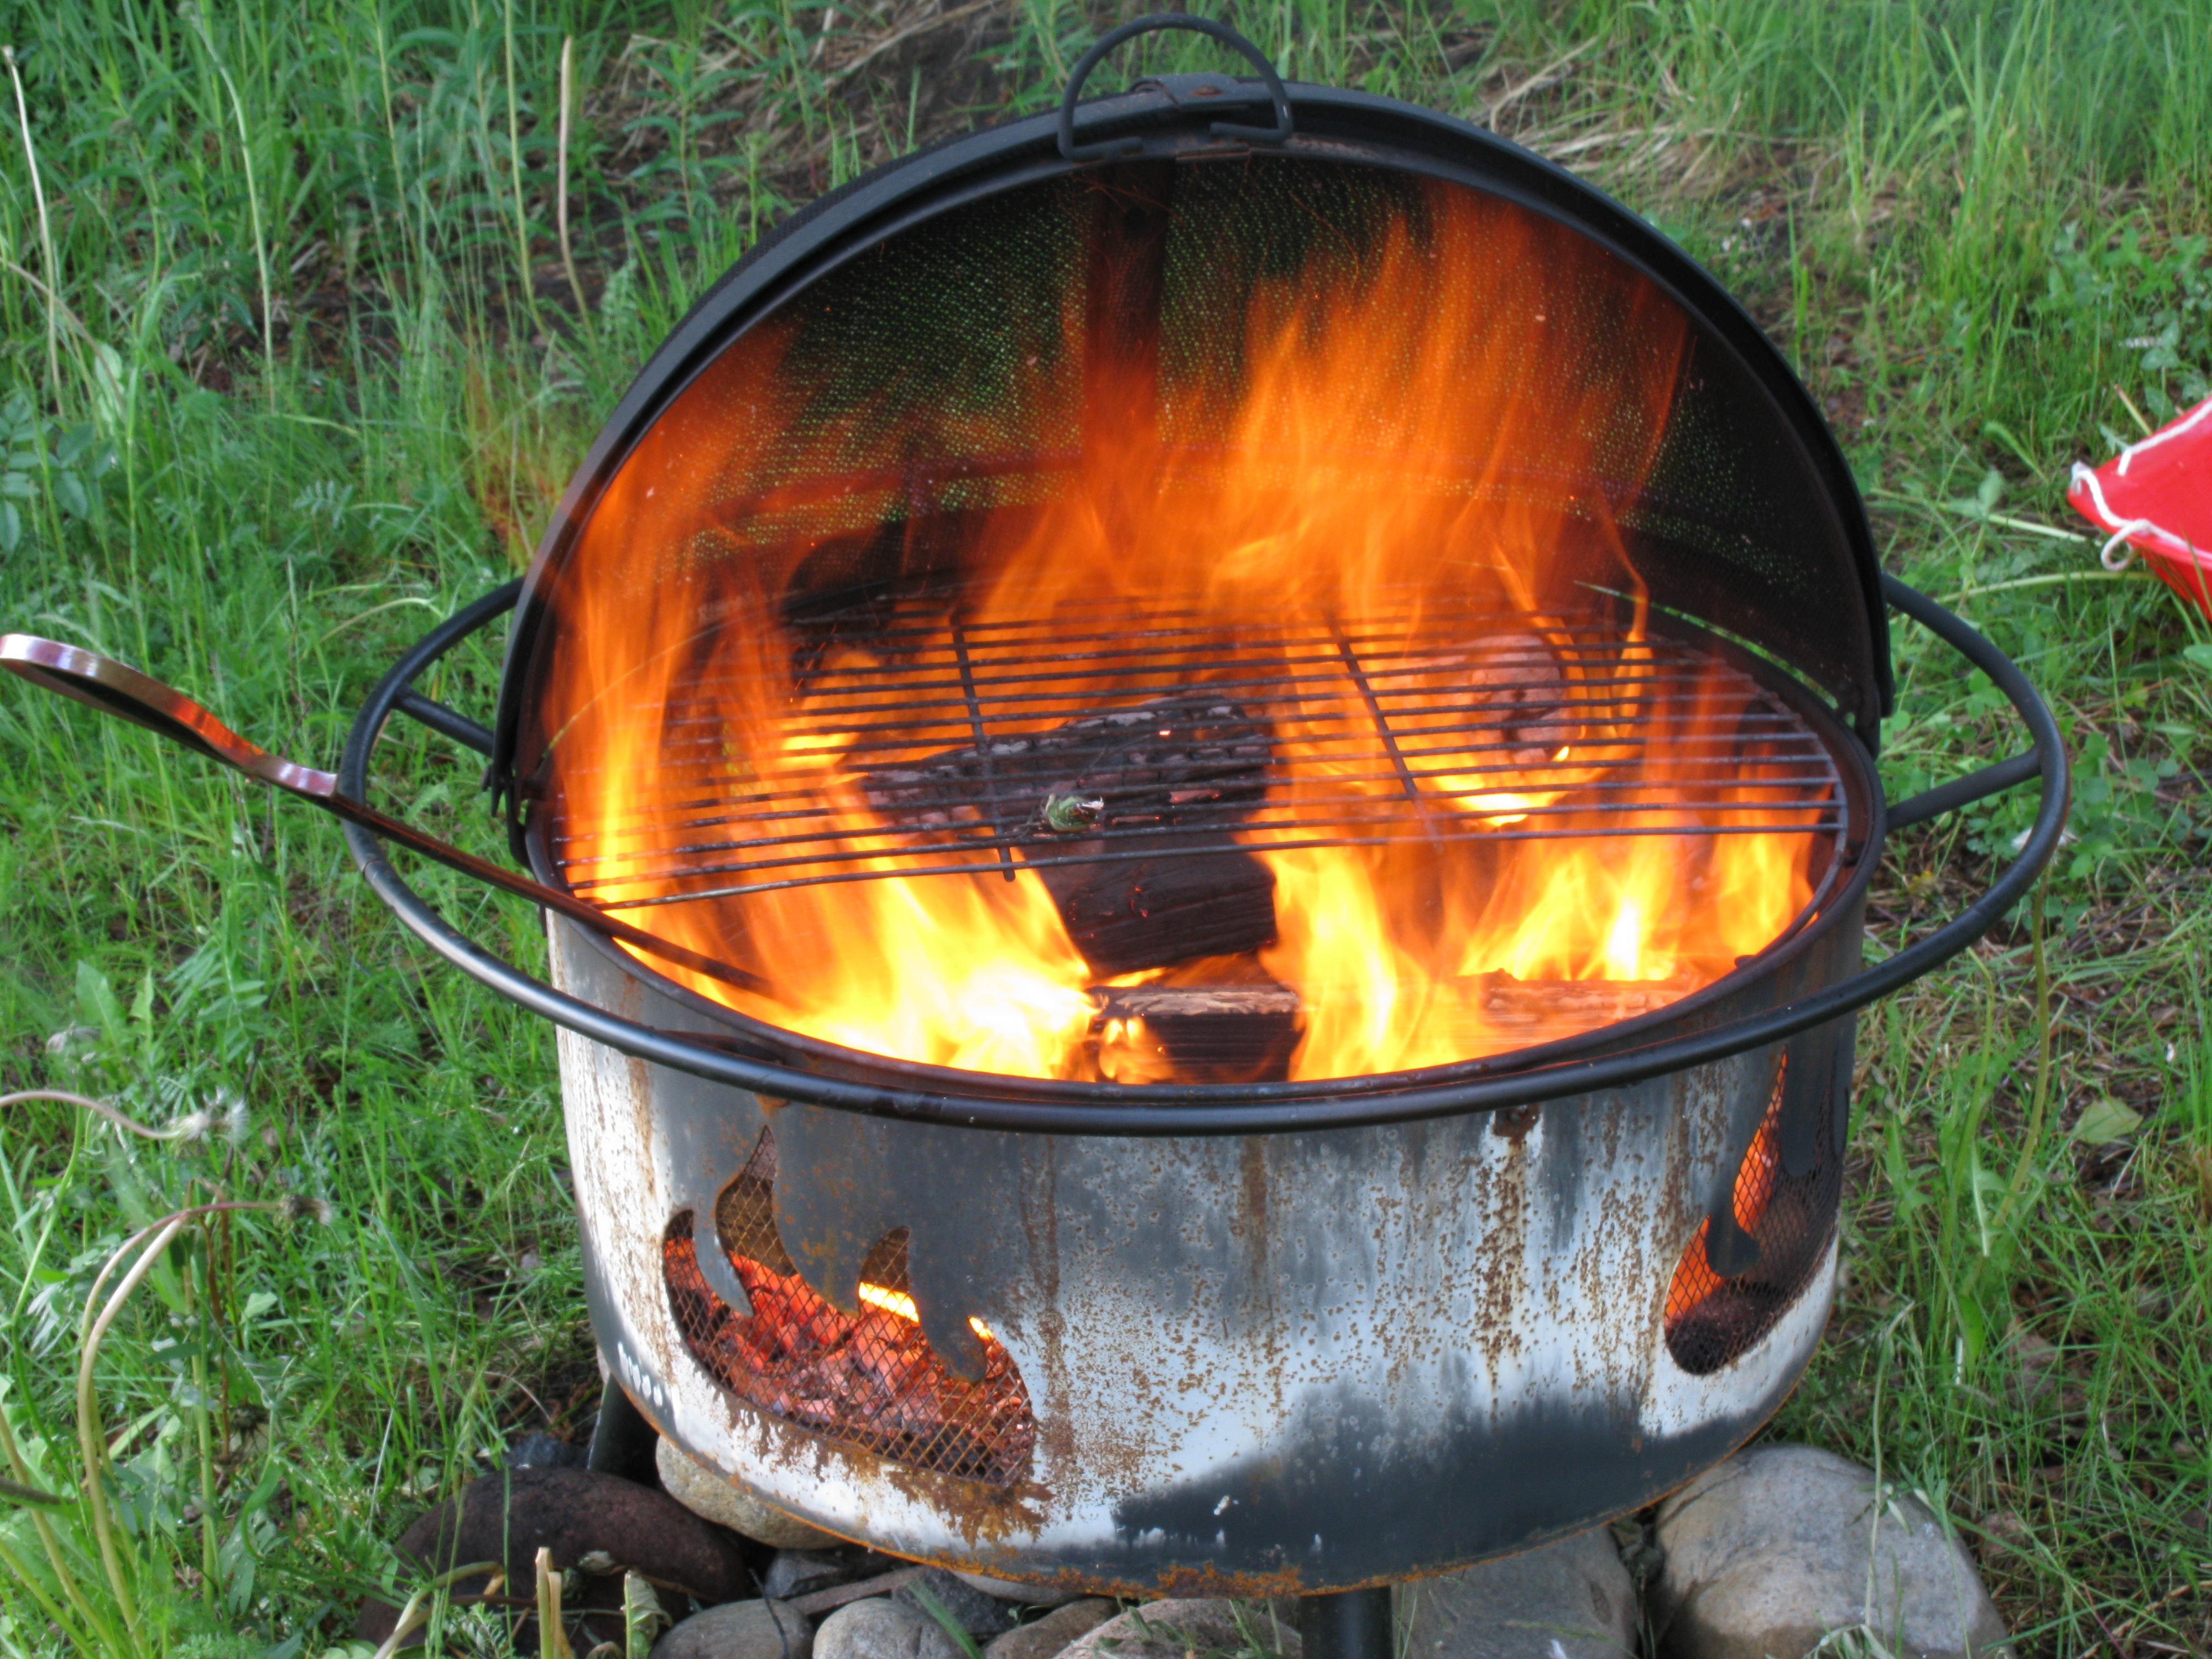 File:Burning barbecue.JPG - Wikimedia Commons